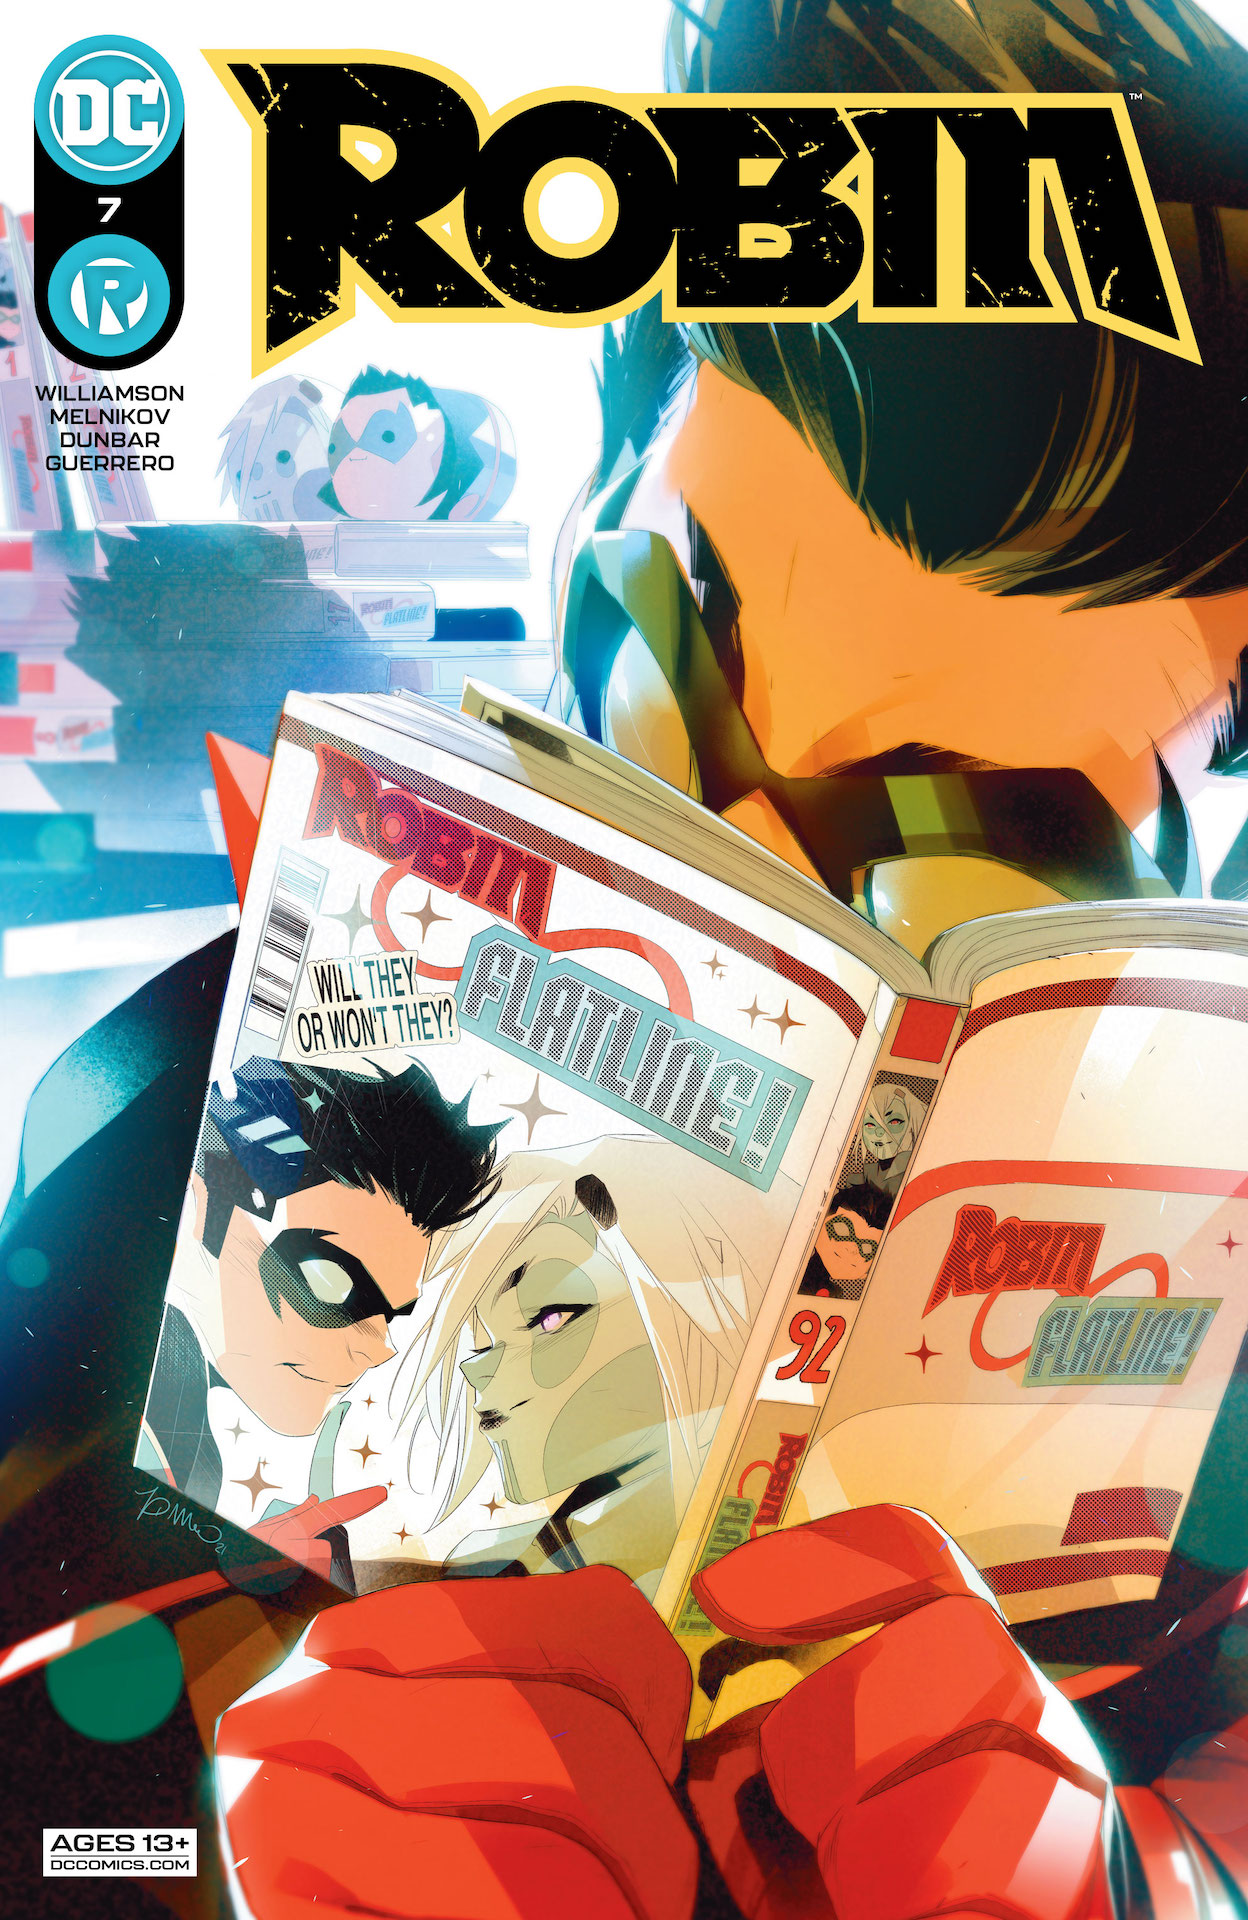 DC Preview: Robin #7